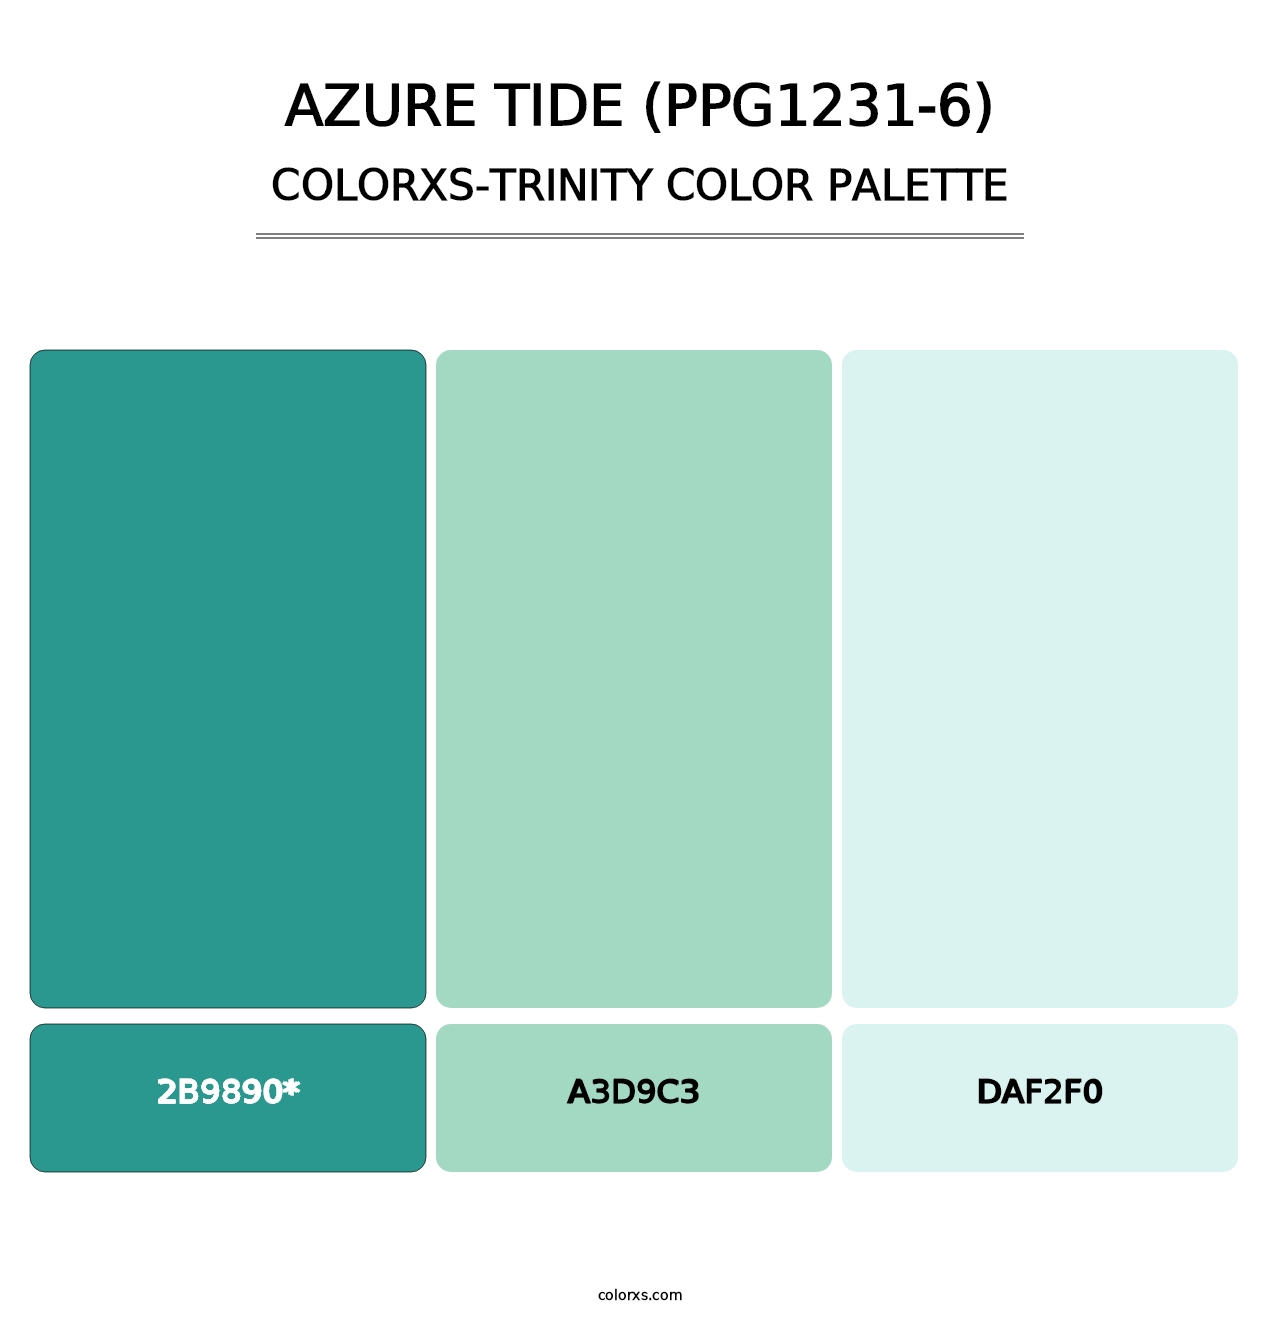 Azure Tide (PPG1231-6) - Colorxs Trinity Palette